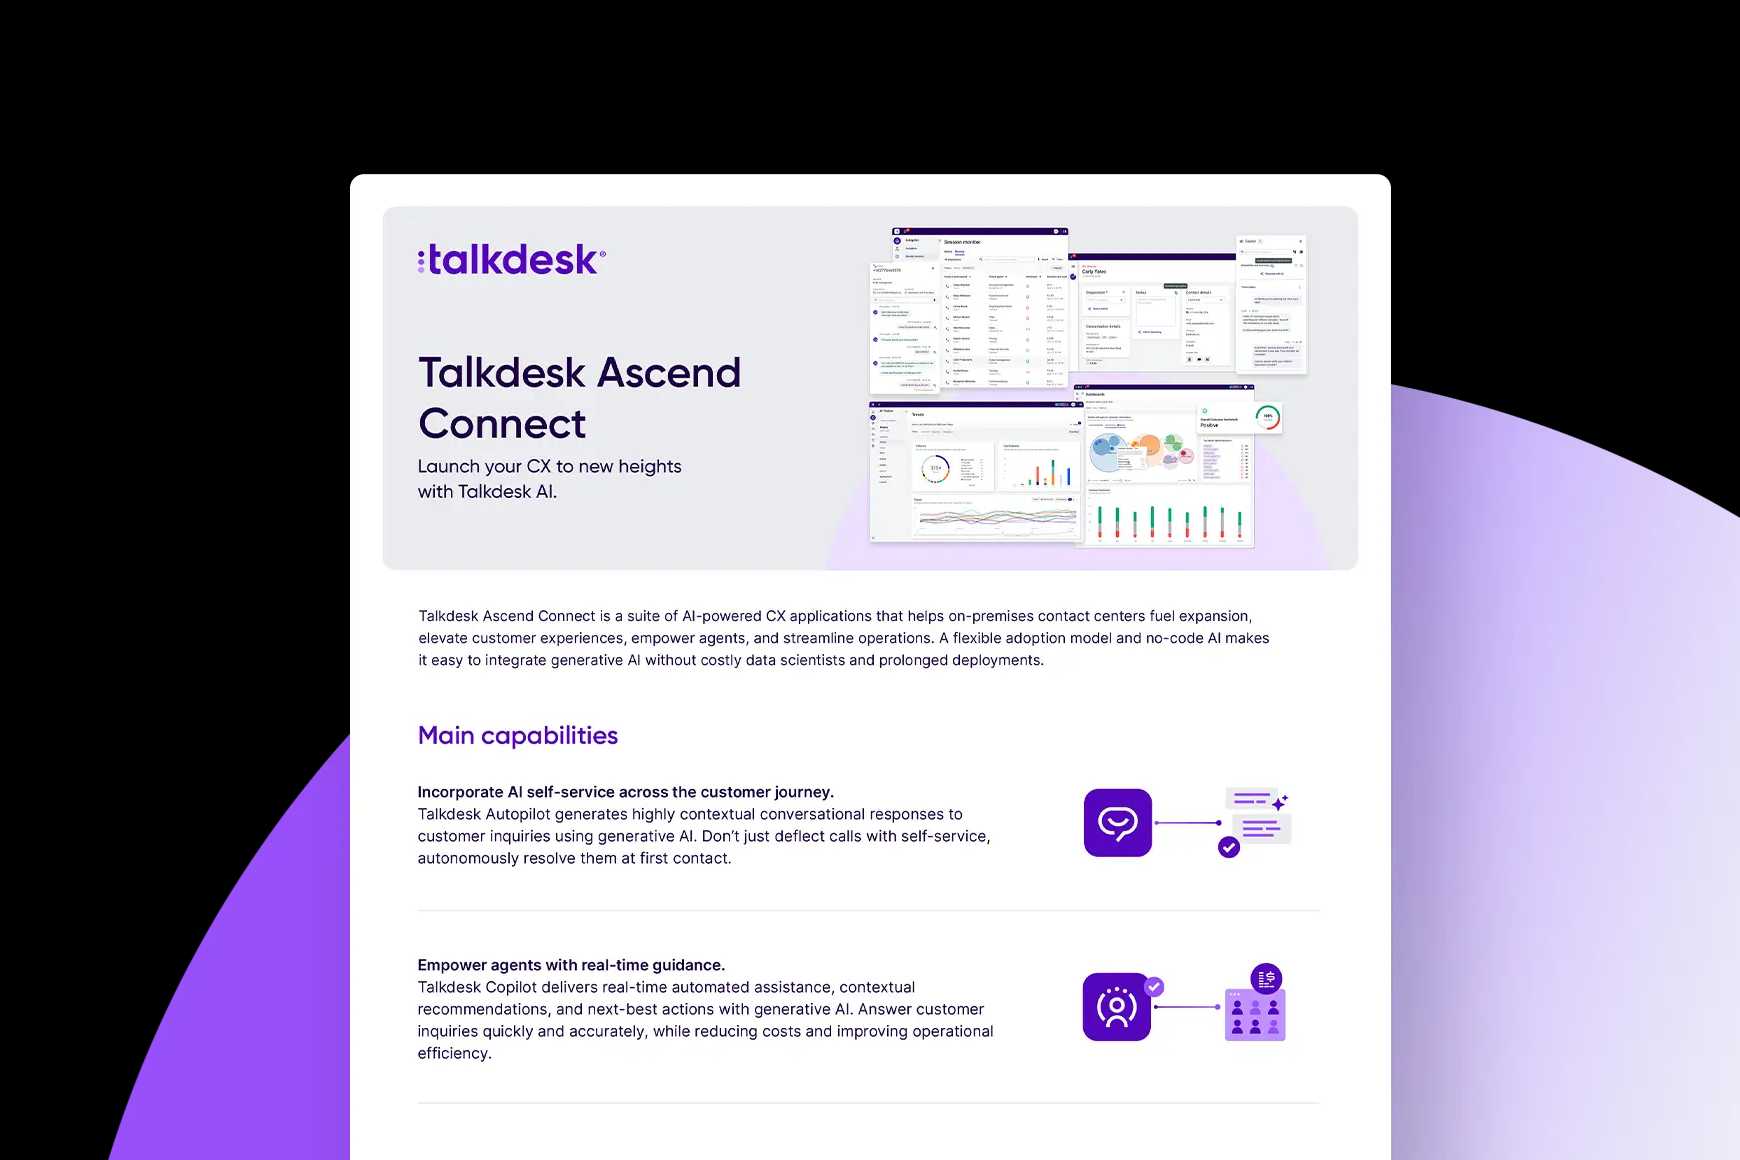 Talkdesk Ascend Connect